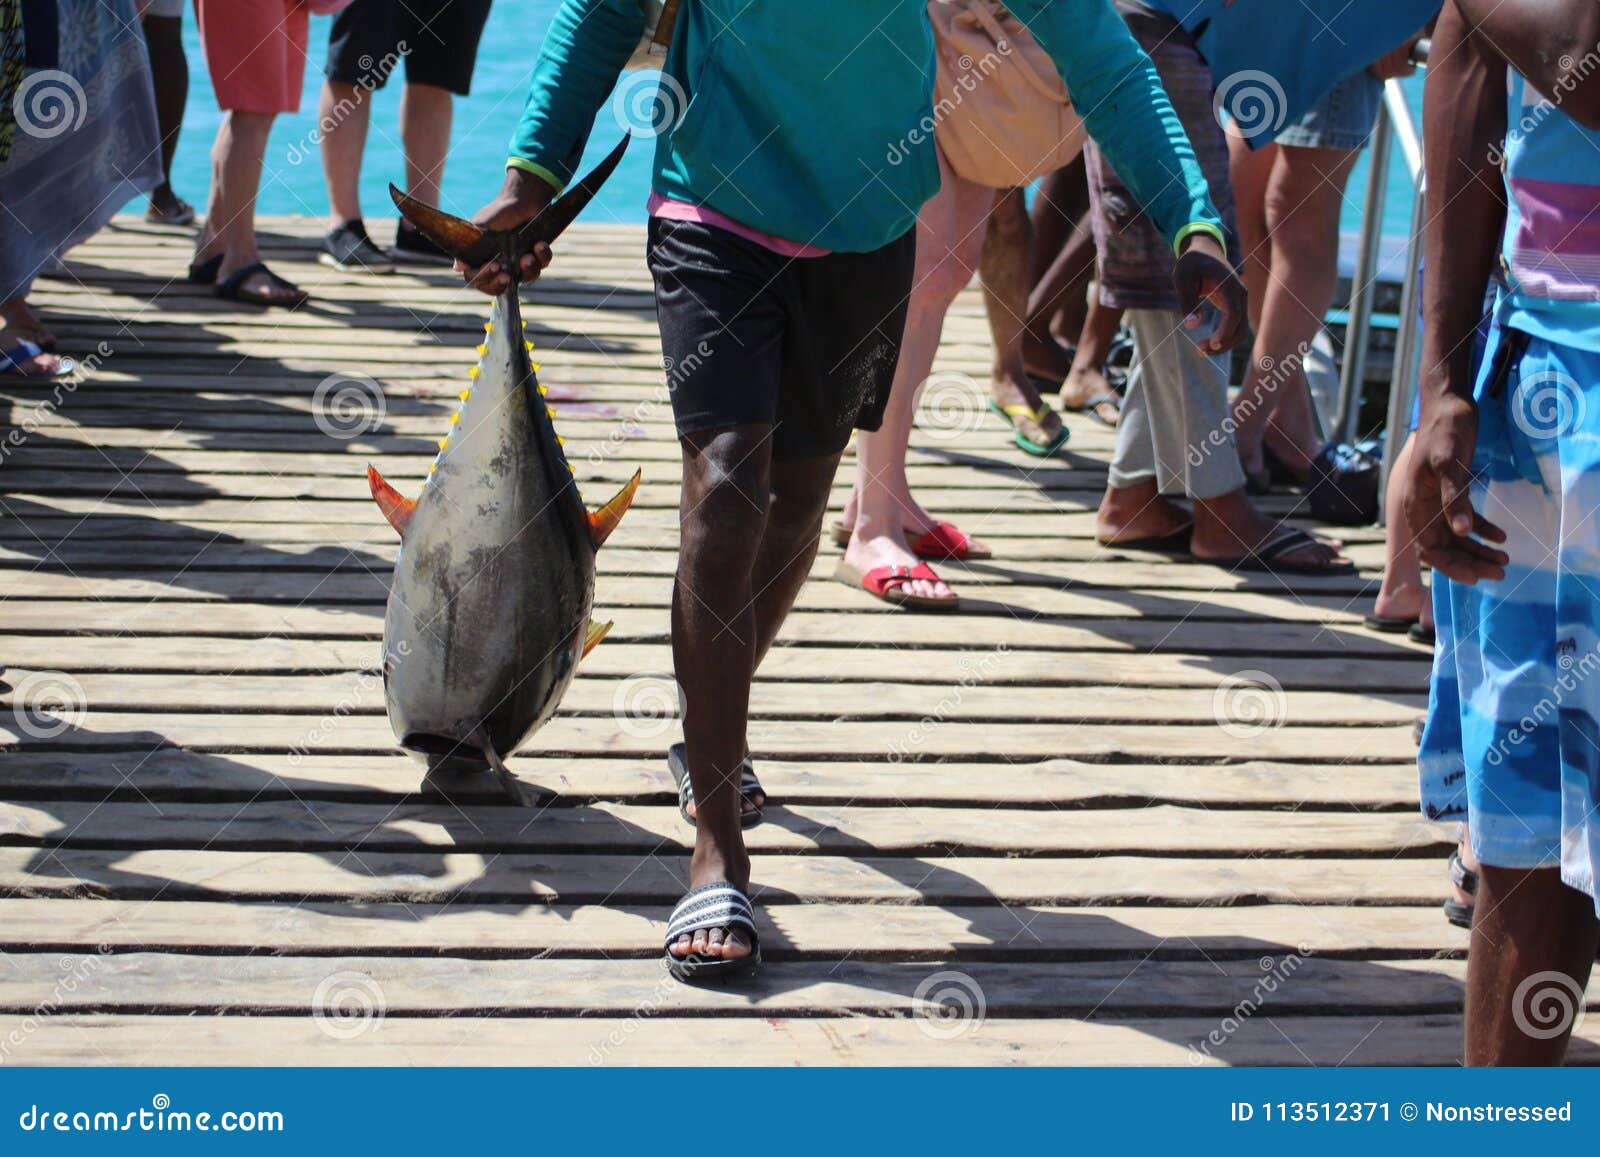 a yellow fin tuna s dragged unceramoniuosly across the pier